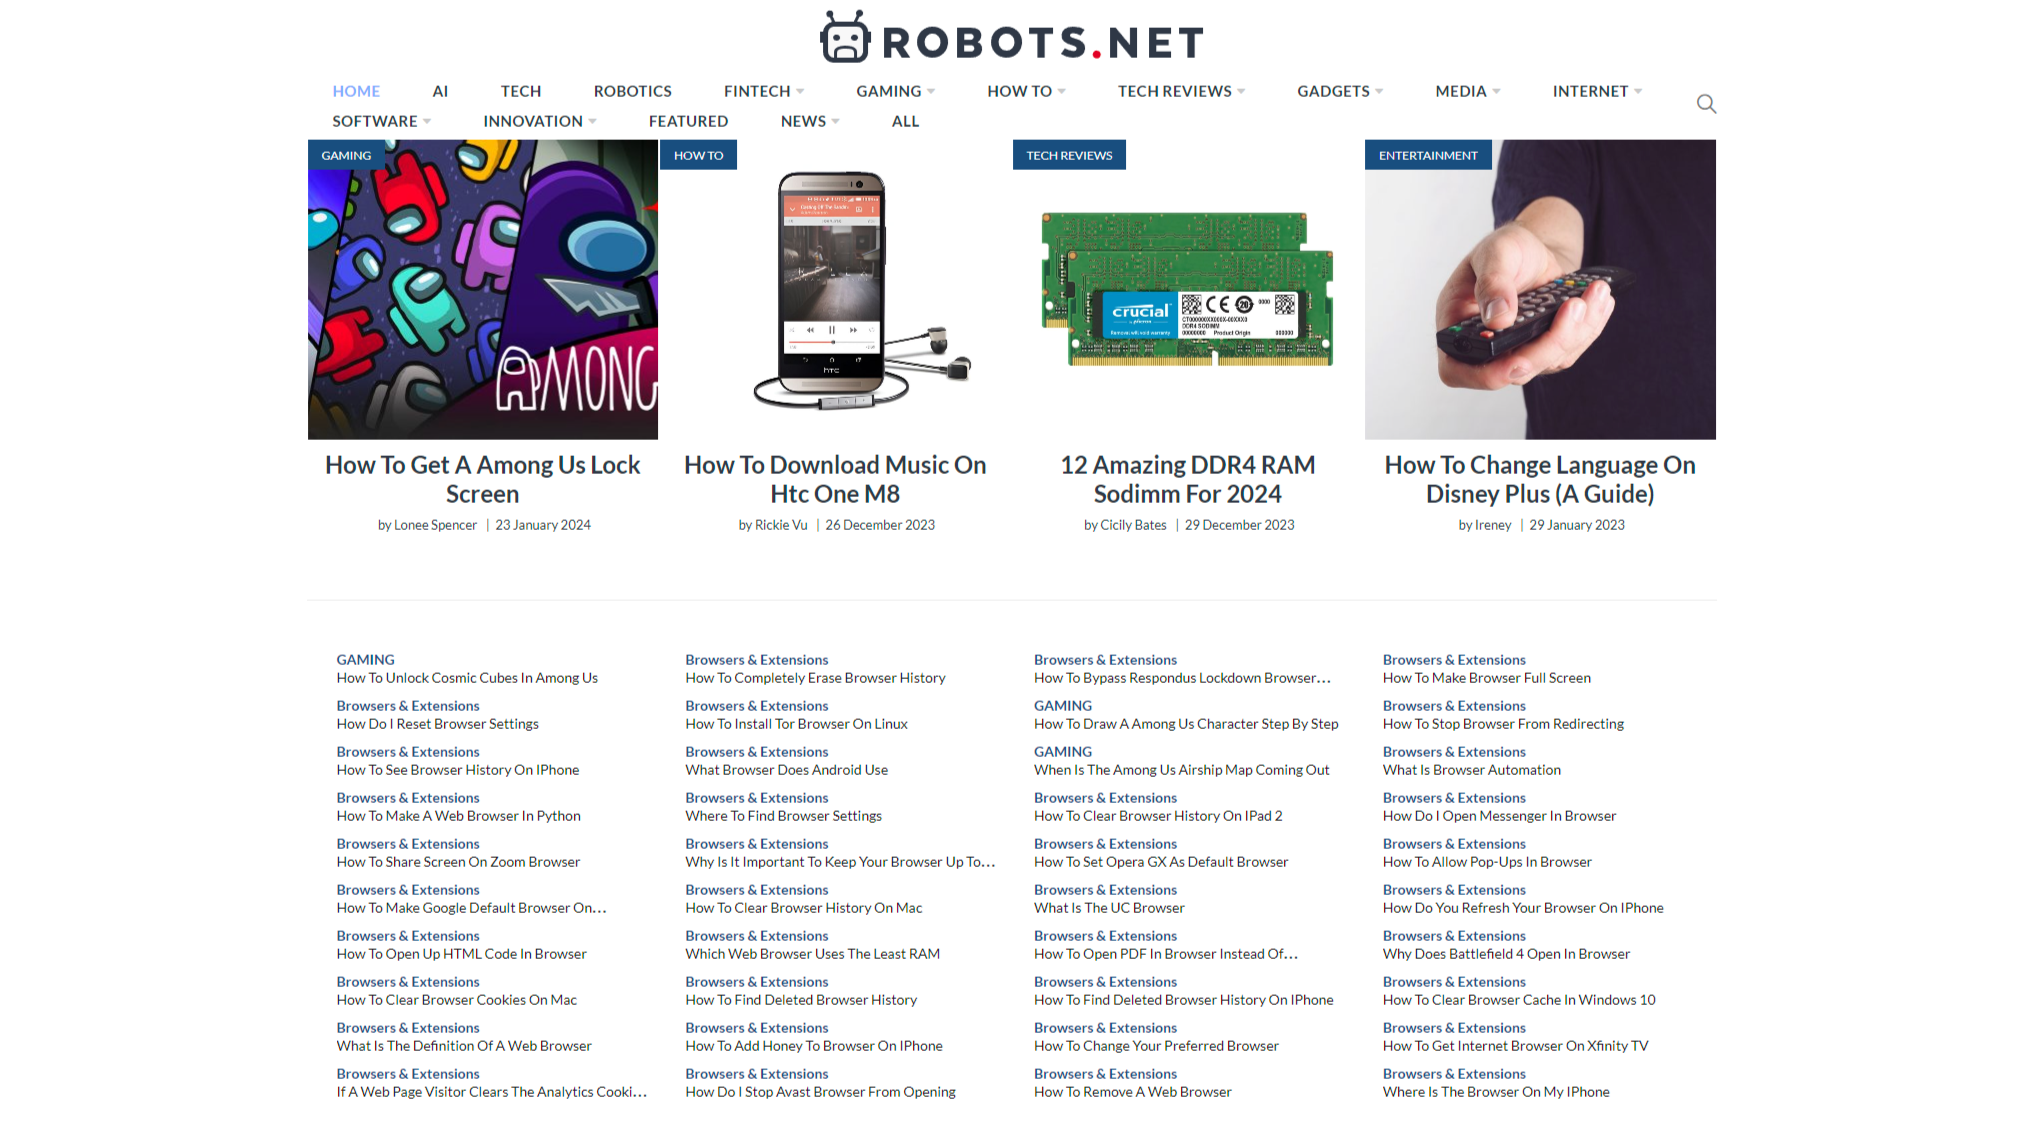 A screenshot of the Robots.net homepage.